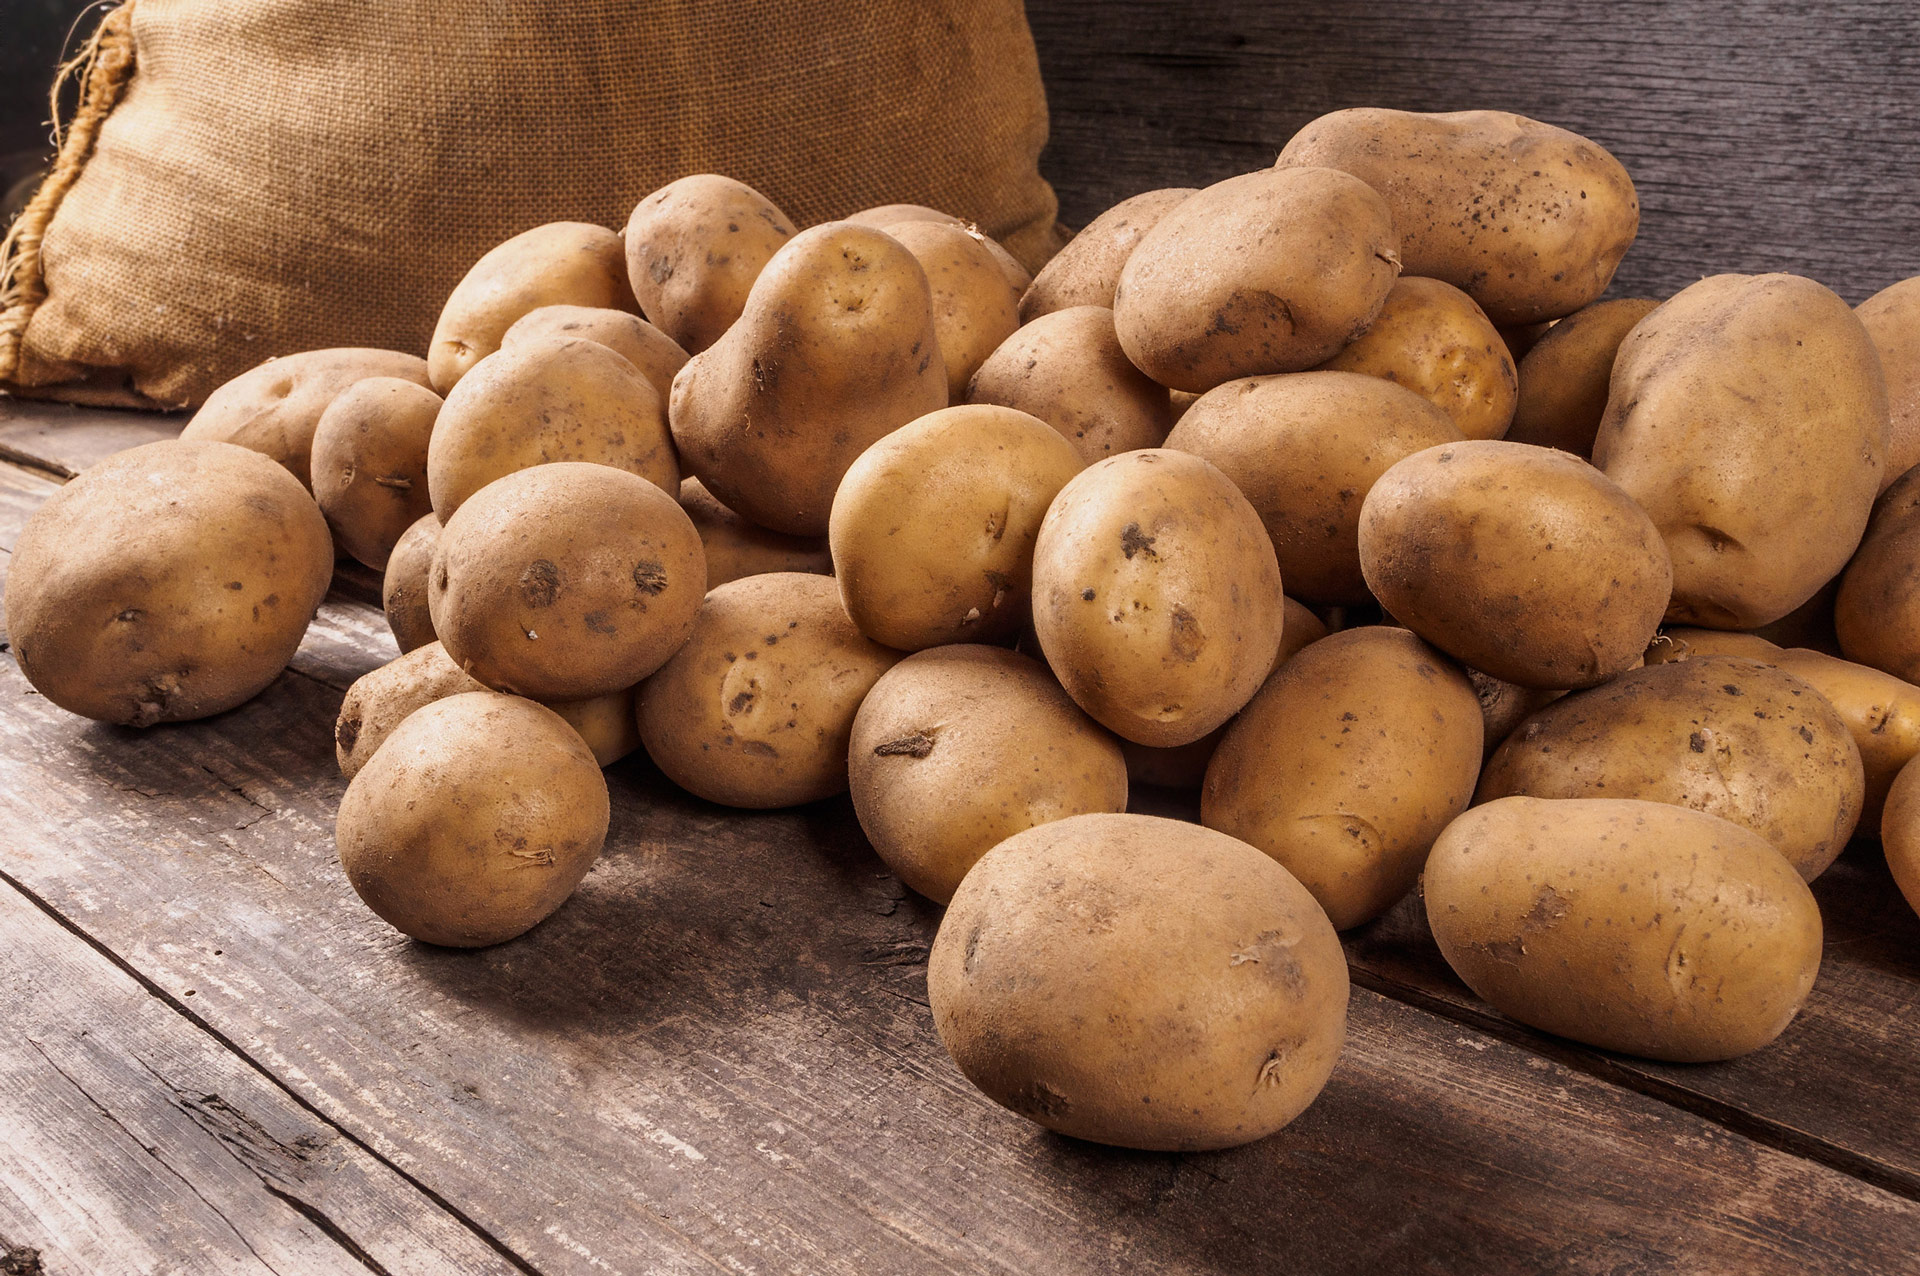 Dutch processing potatoes reach their highest-ever February price